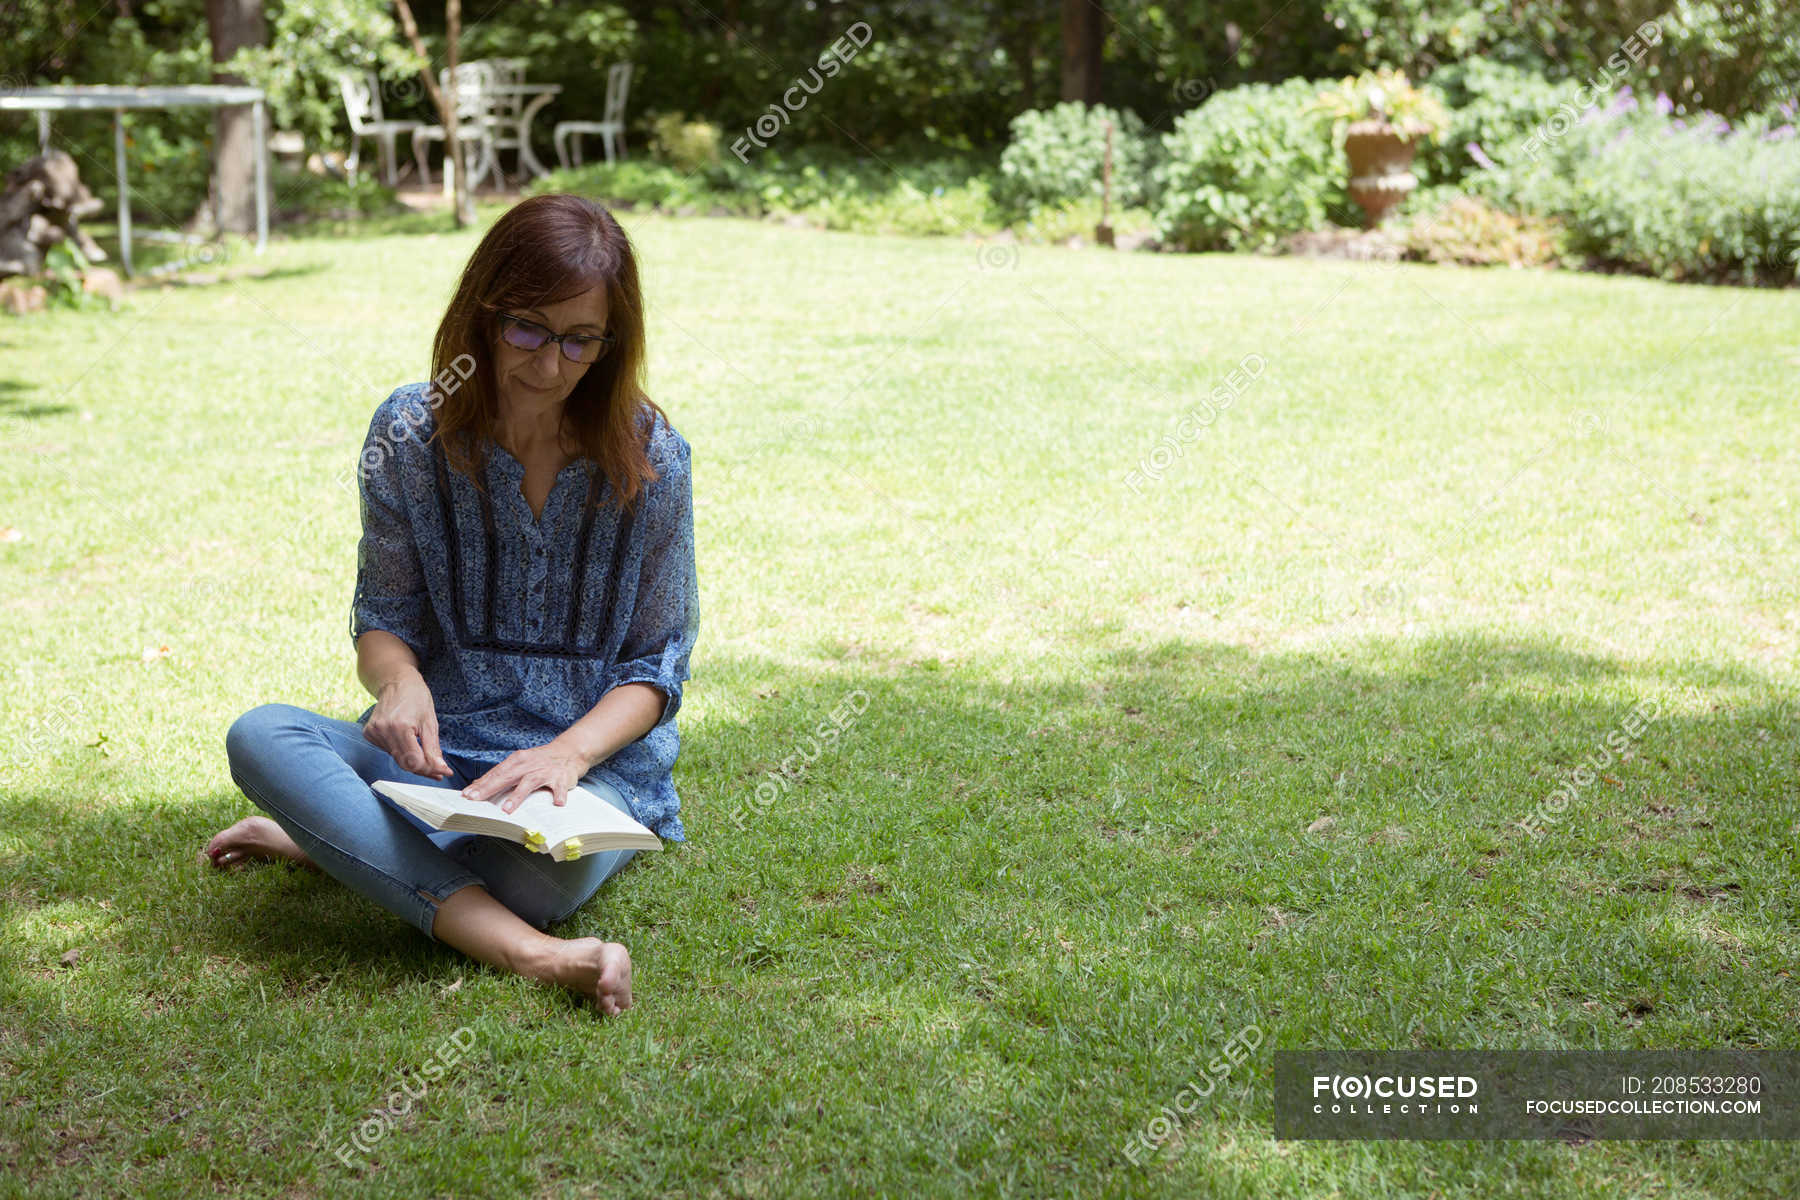 https://st.focusedcollection.com/18590116/i/1800/focused_208533280-stock-photo-woman-reading-book-garden-sunny.jpg